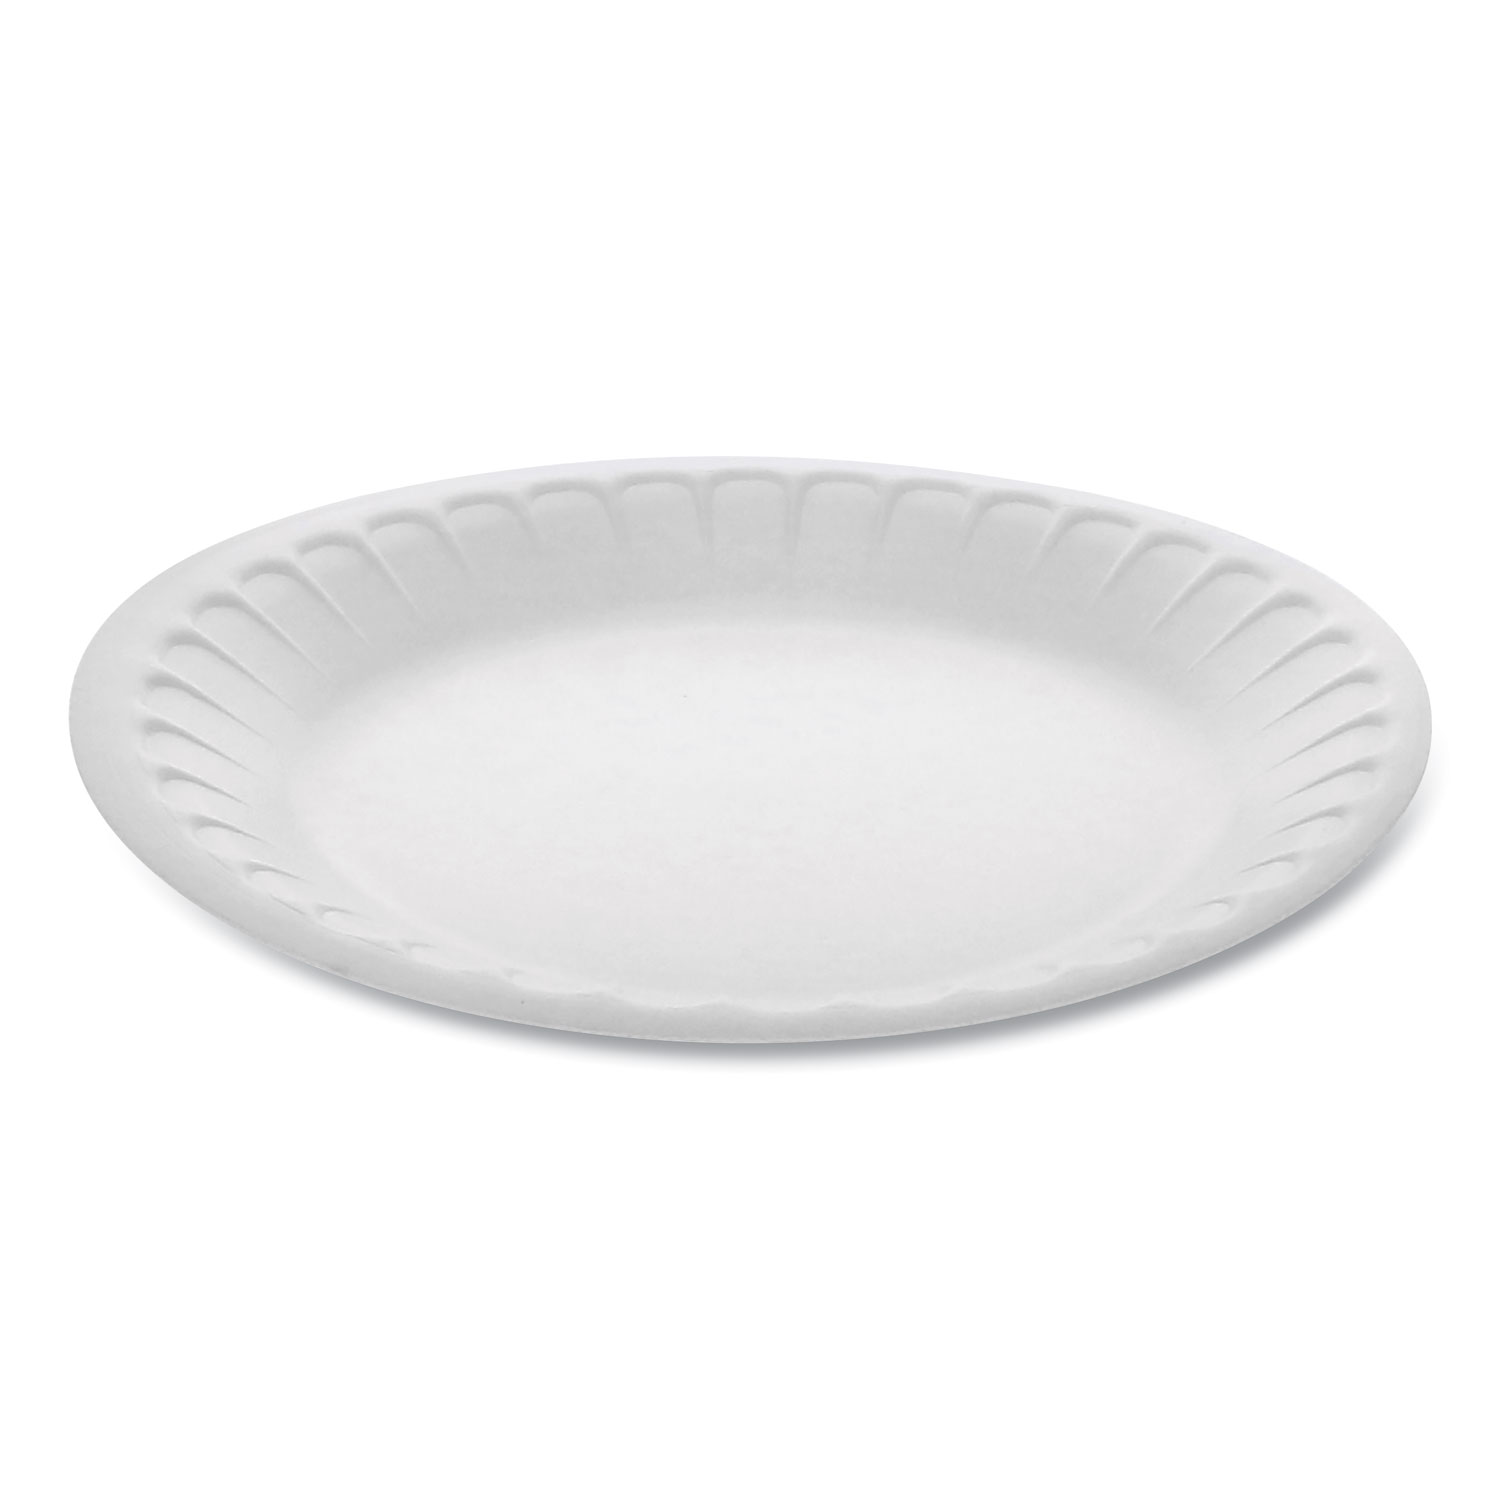 Pactiv Unlaminated Foam Dinnerware, Plate, 7 Diameter, White, 900/Carton